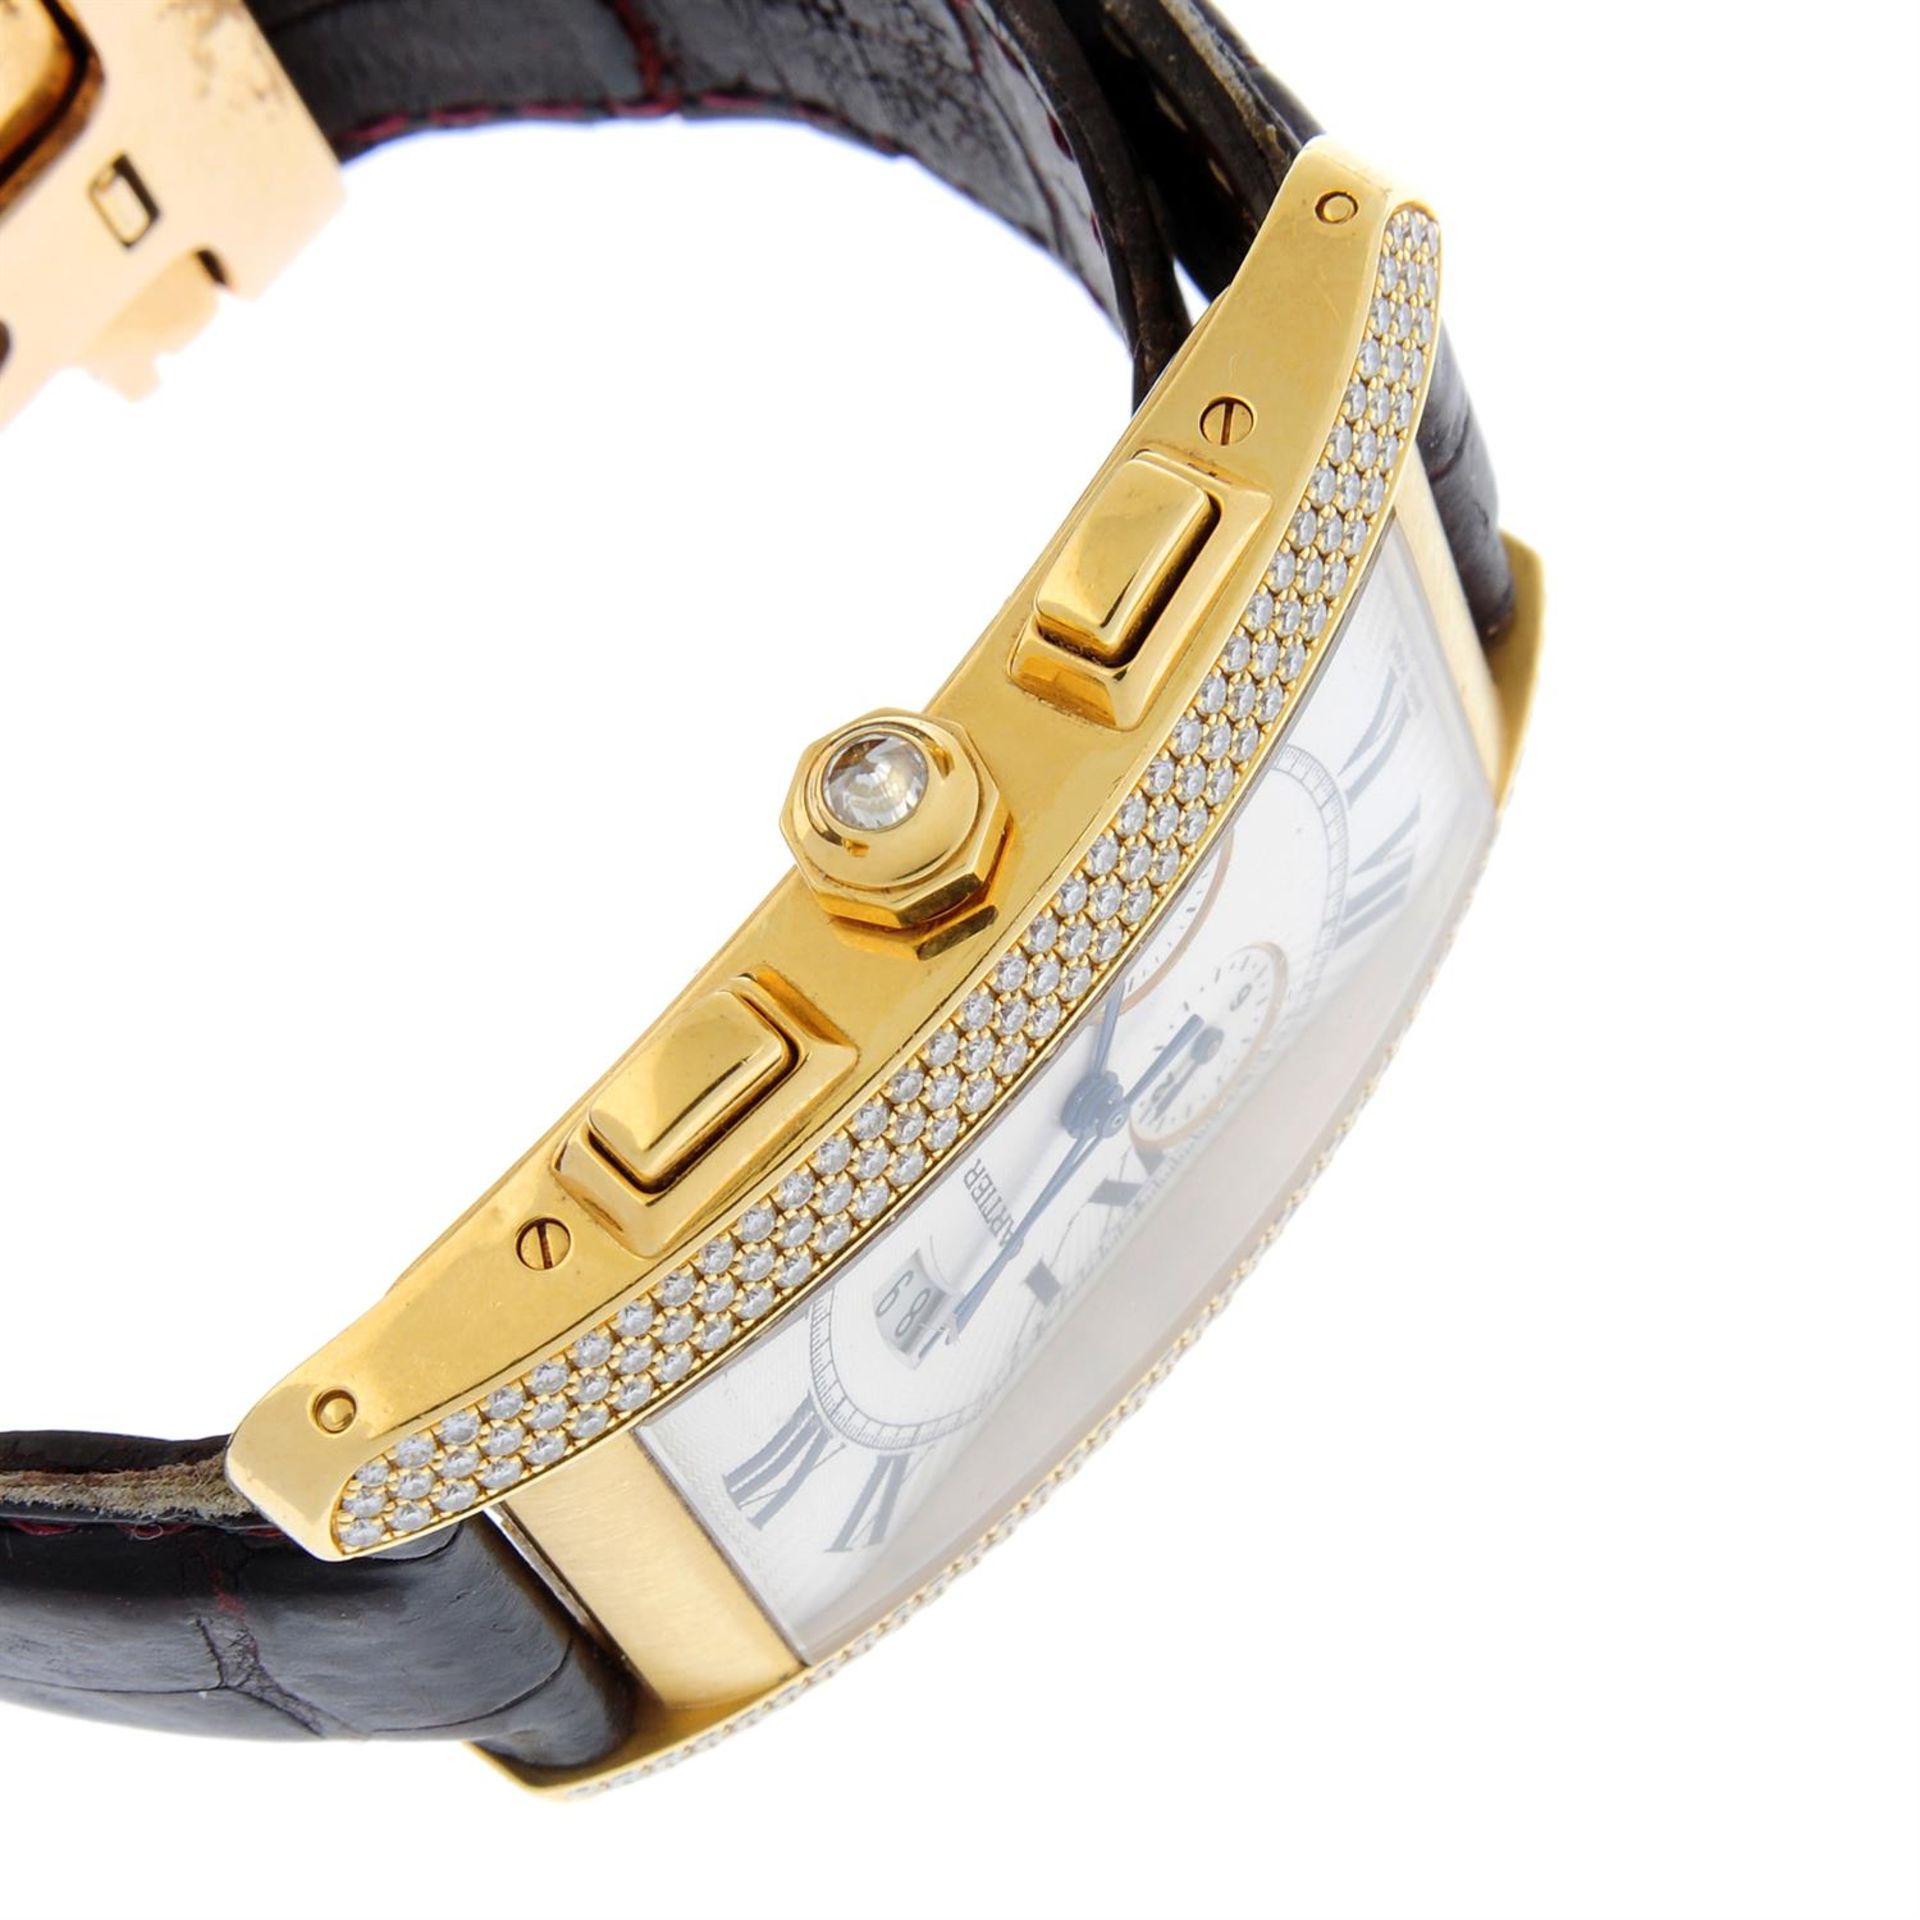 CARTIER - a factory diamond set 18ct gold Tank Américaine chronograph wrist watch, 27x37mm. - Image 3 of 5